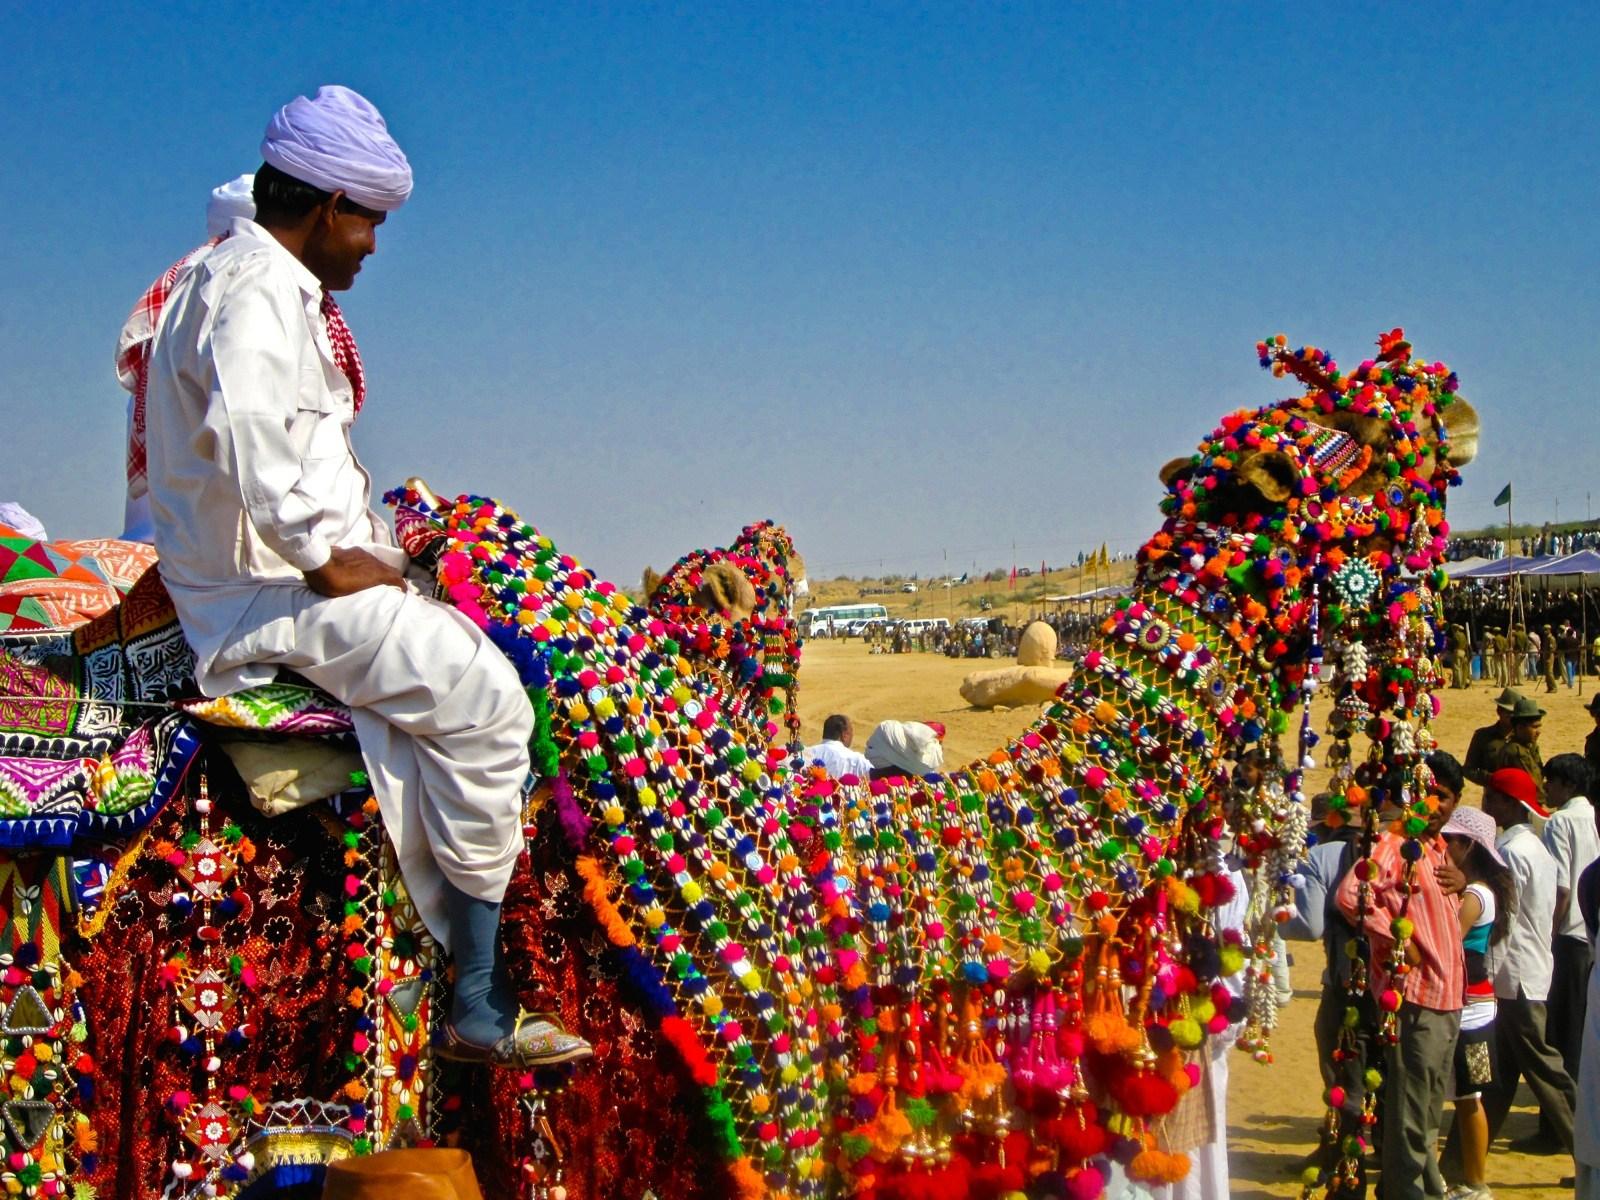 Jaisalmer Desert Festival by Rajasthan Tourism Development Corporation